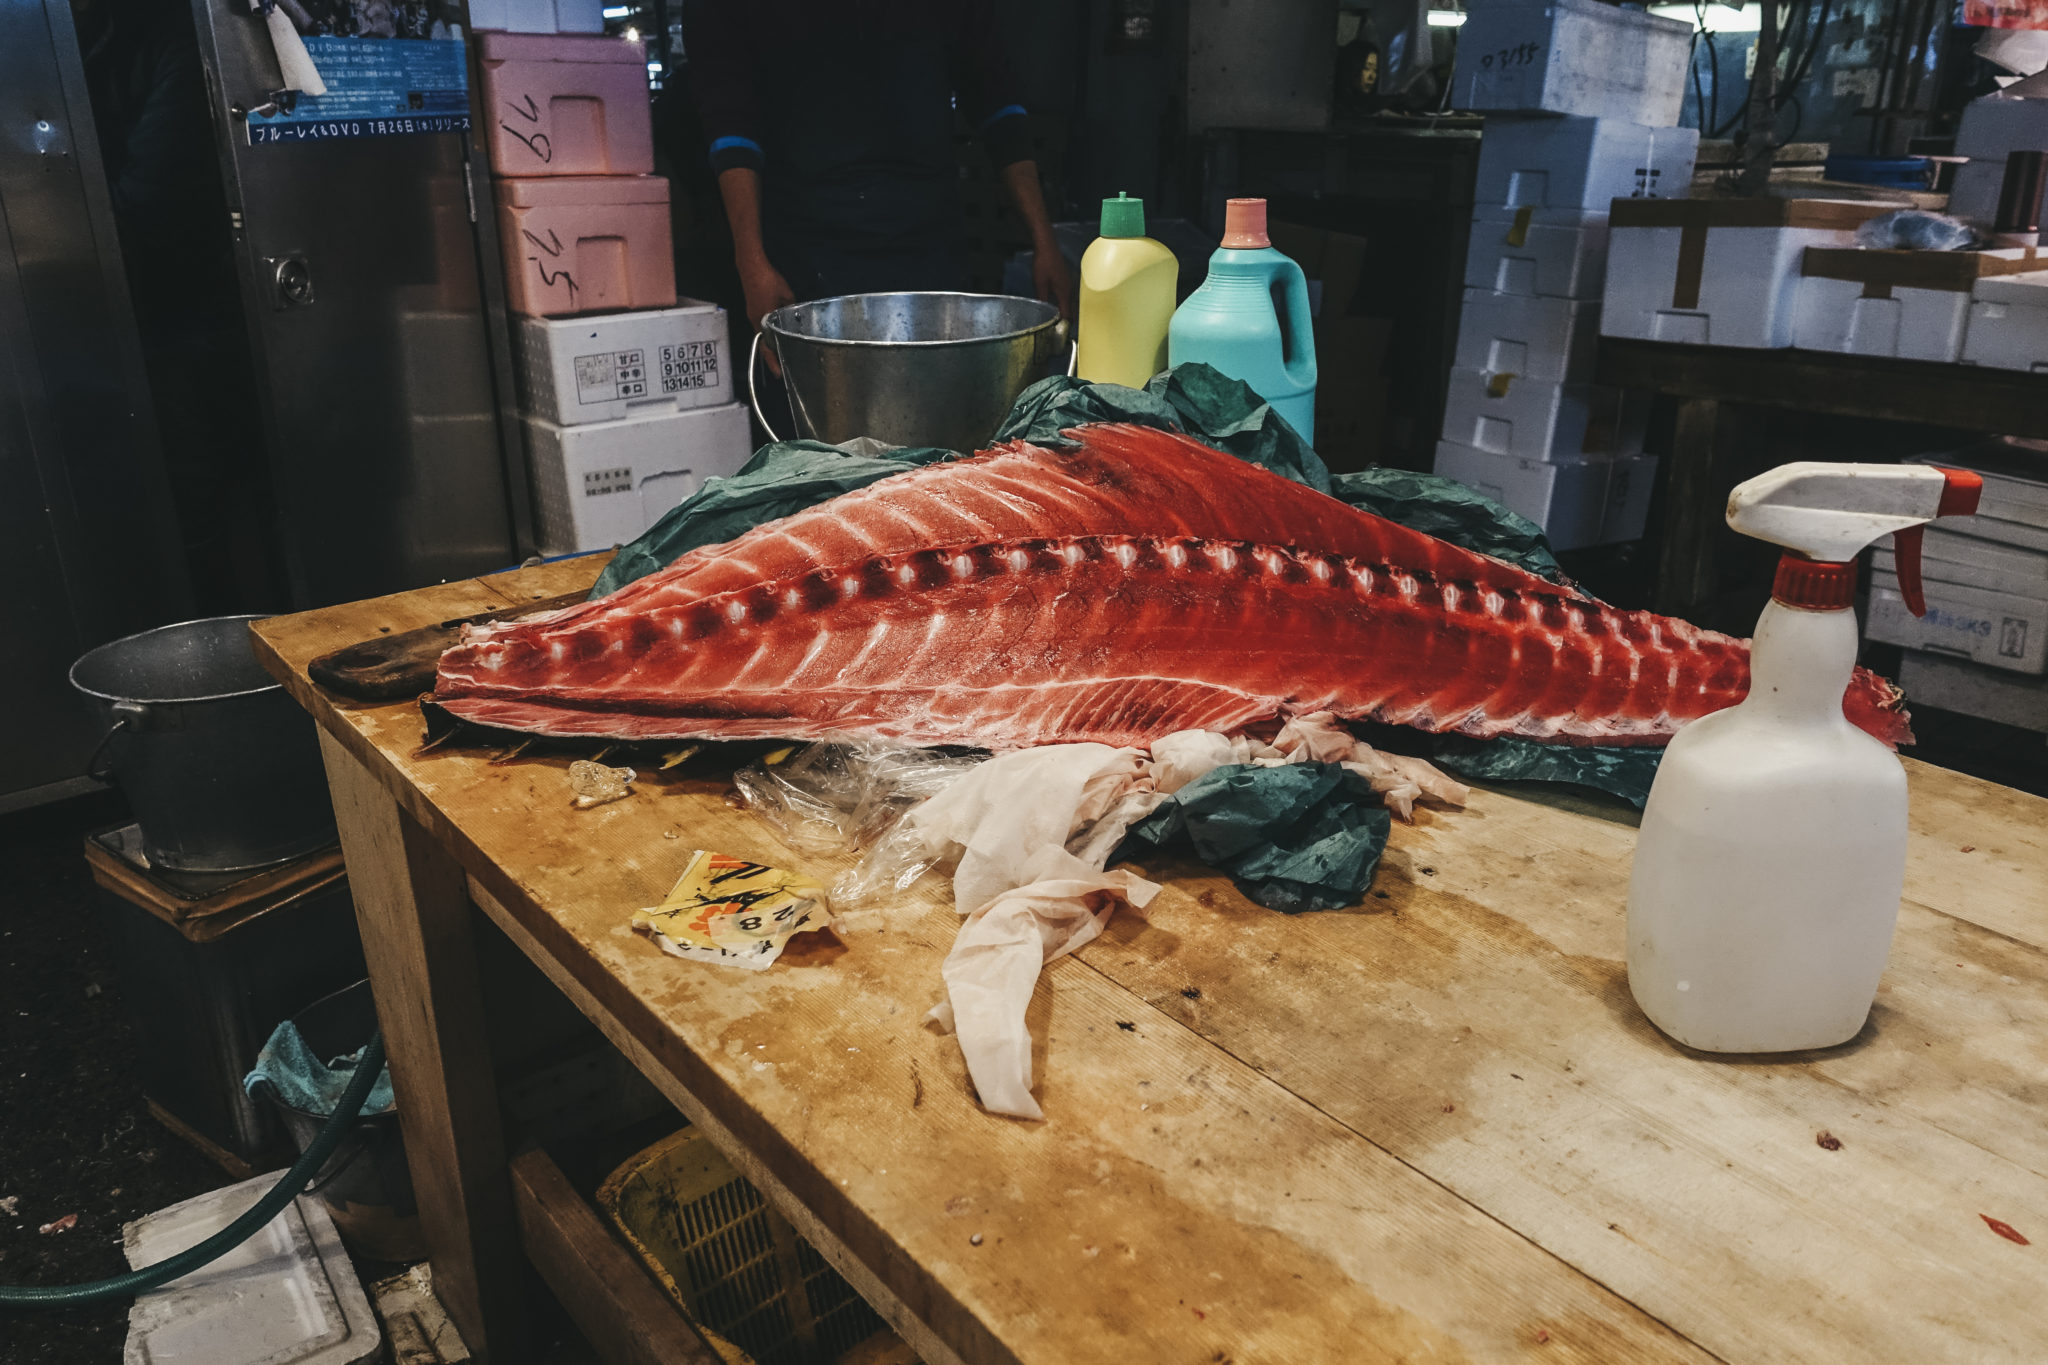 06 – Preparing the tuna